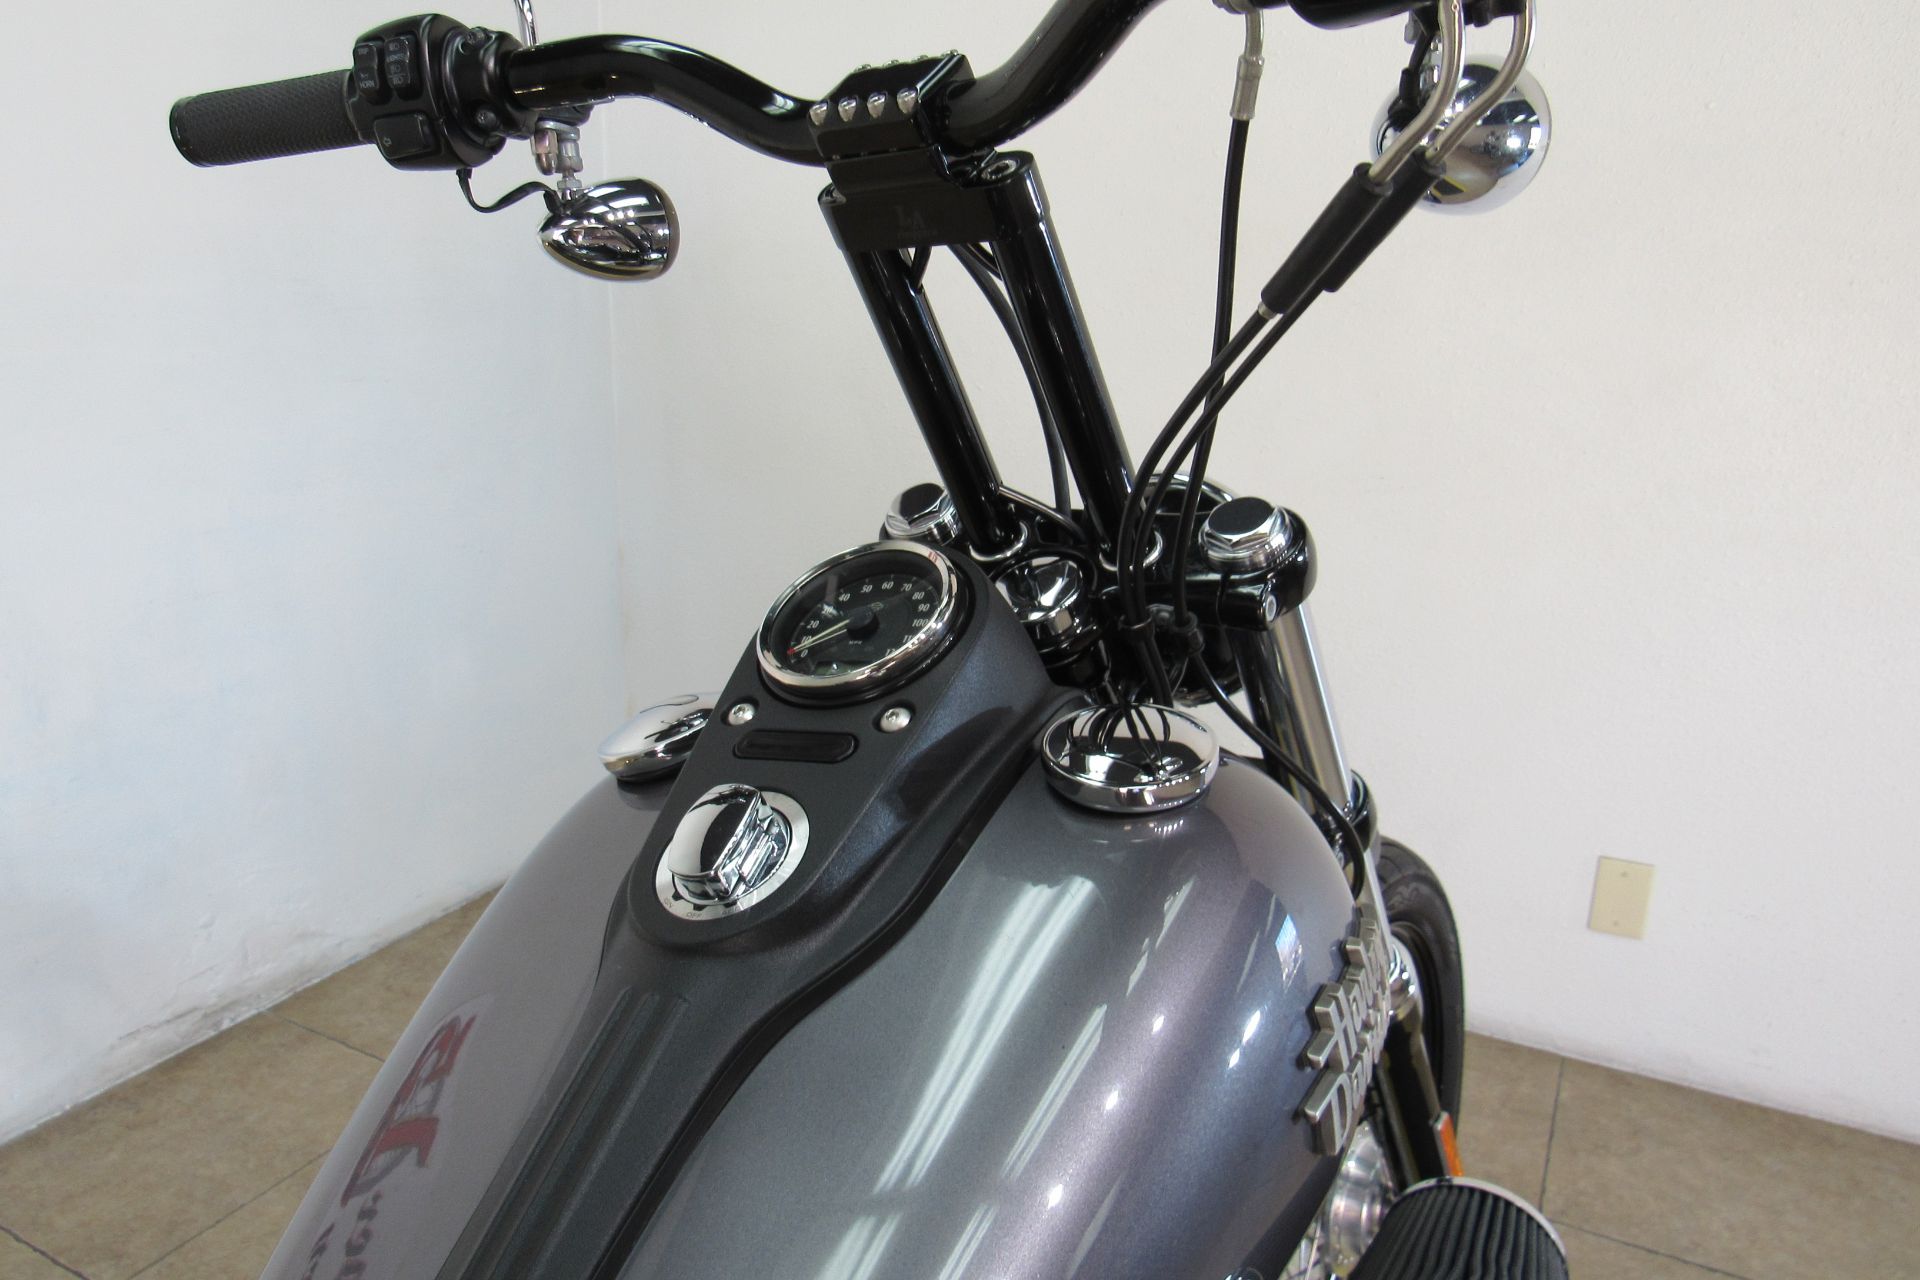 2014 Harley-Davidson Dyna® Street Bob® in Temecula, California - Photo 27